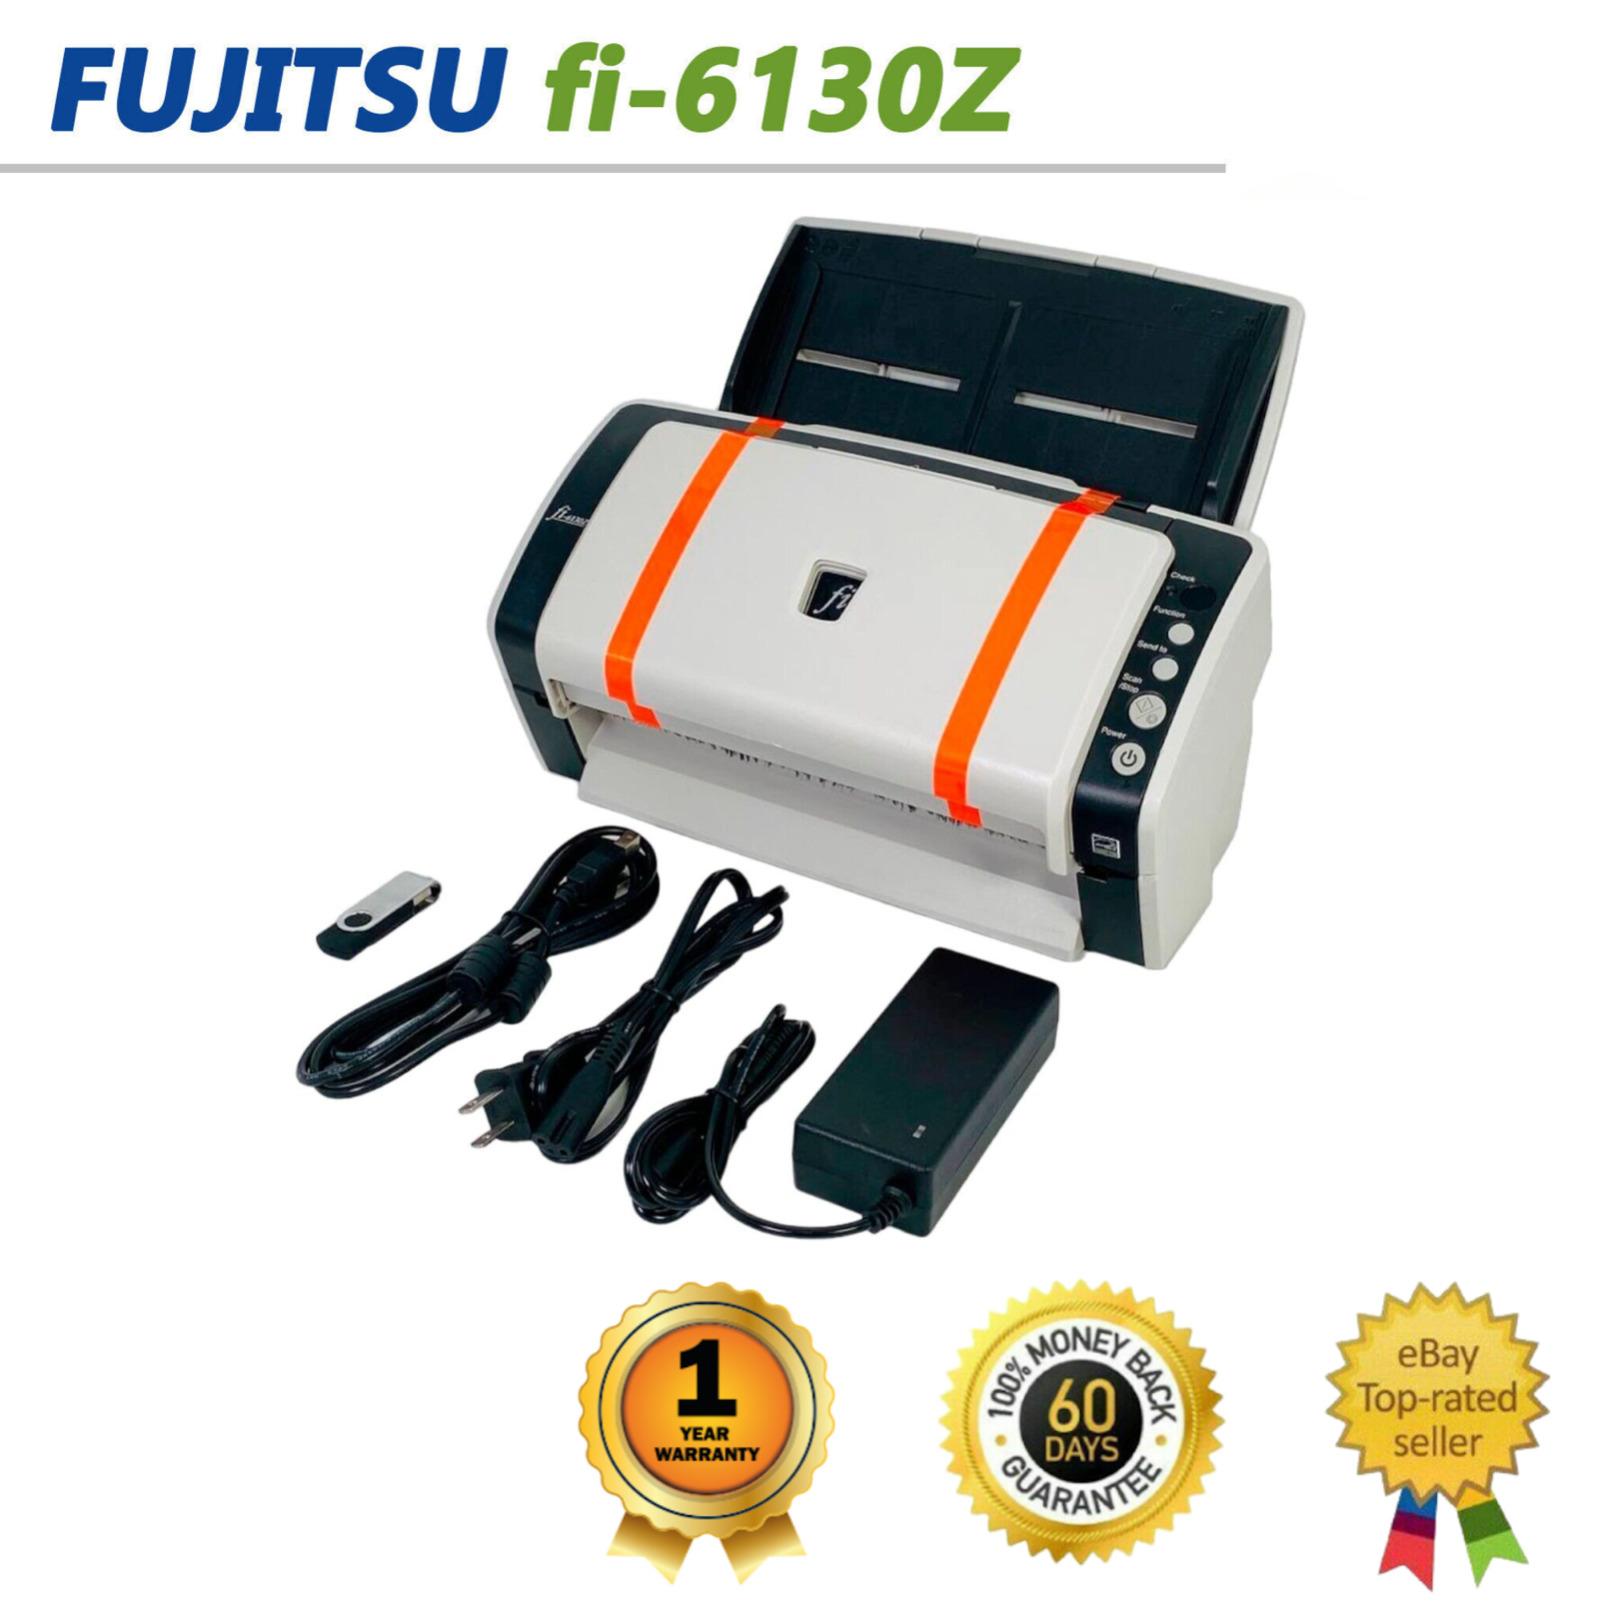 Fujitsu FI-6130Z Scanner COMPLETE SET (Adapter+USB+Drivers) - 1 YEAR WARRANTY